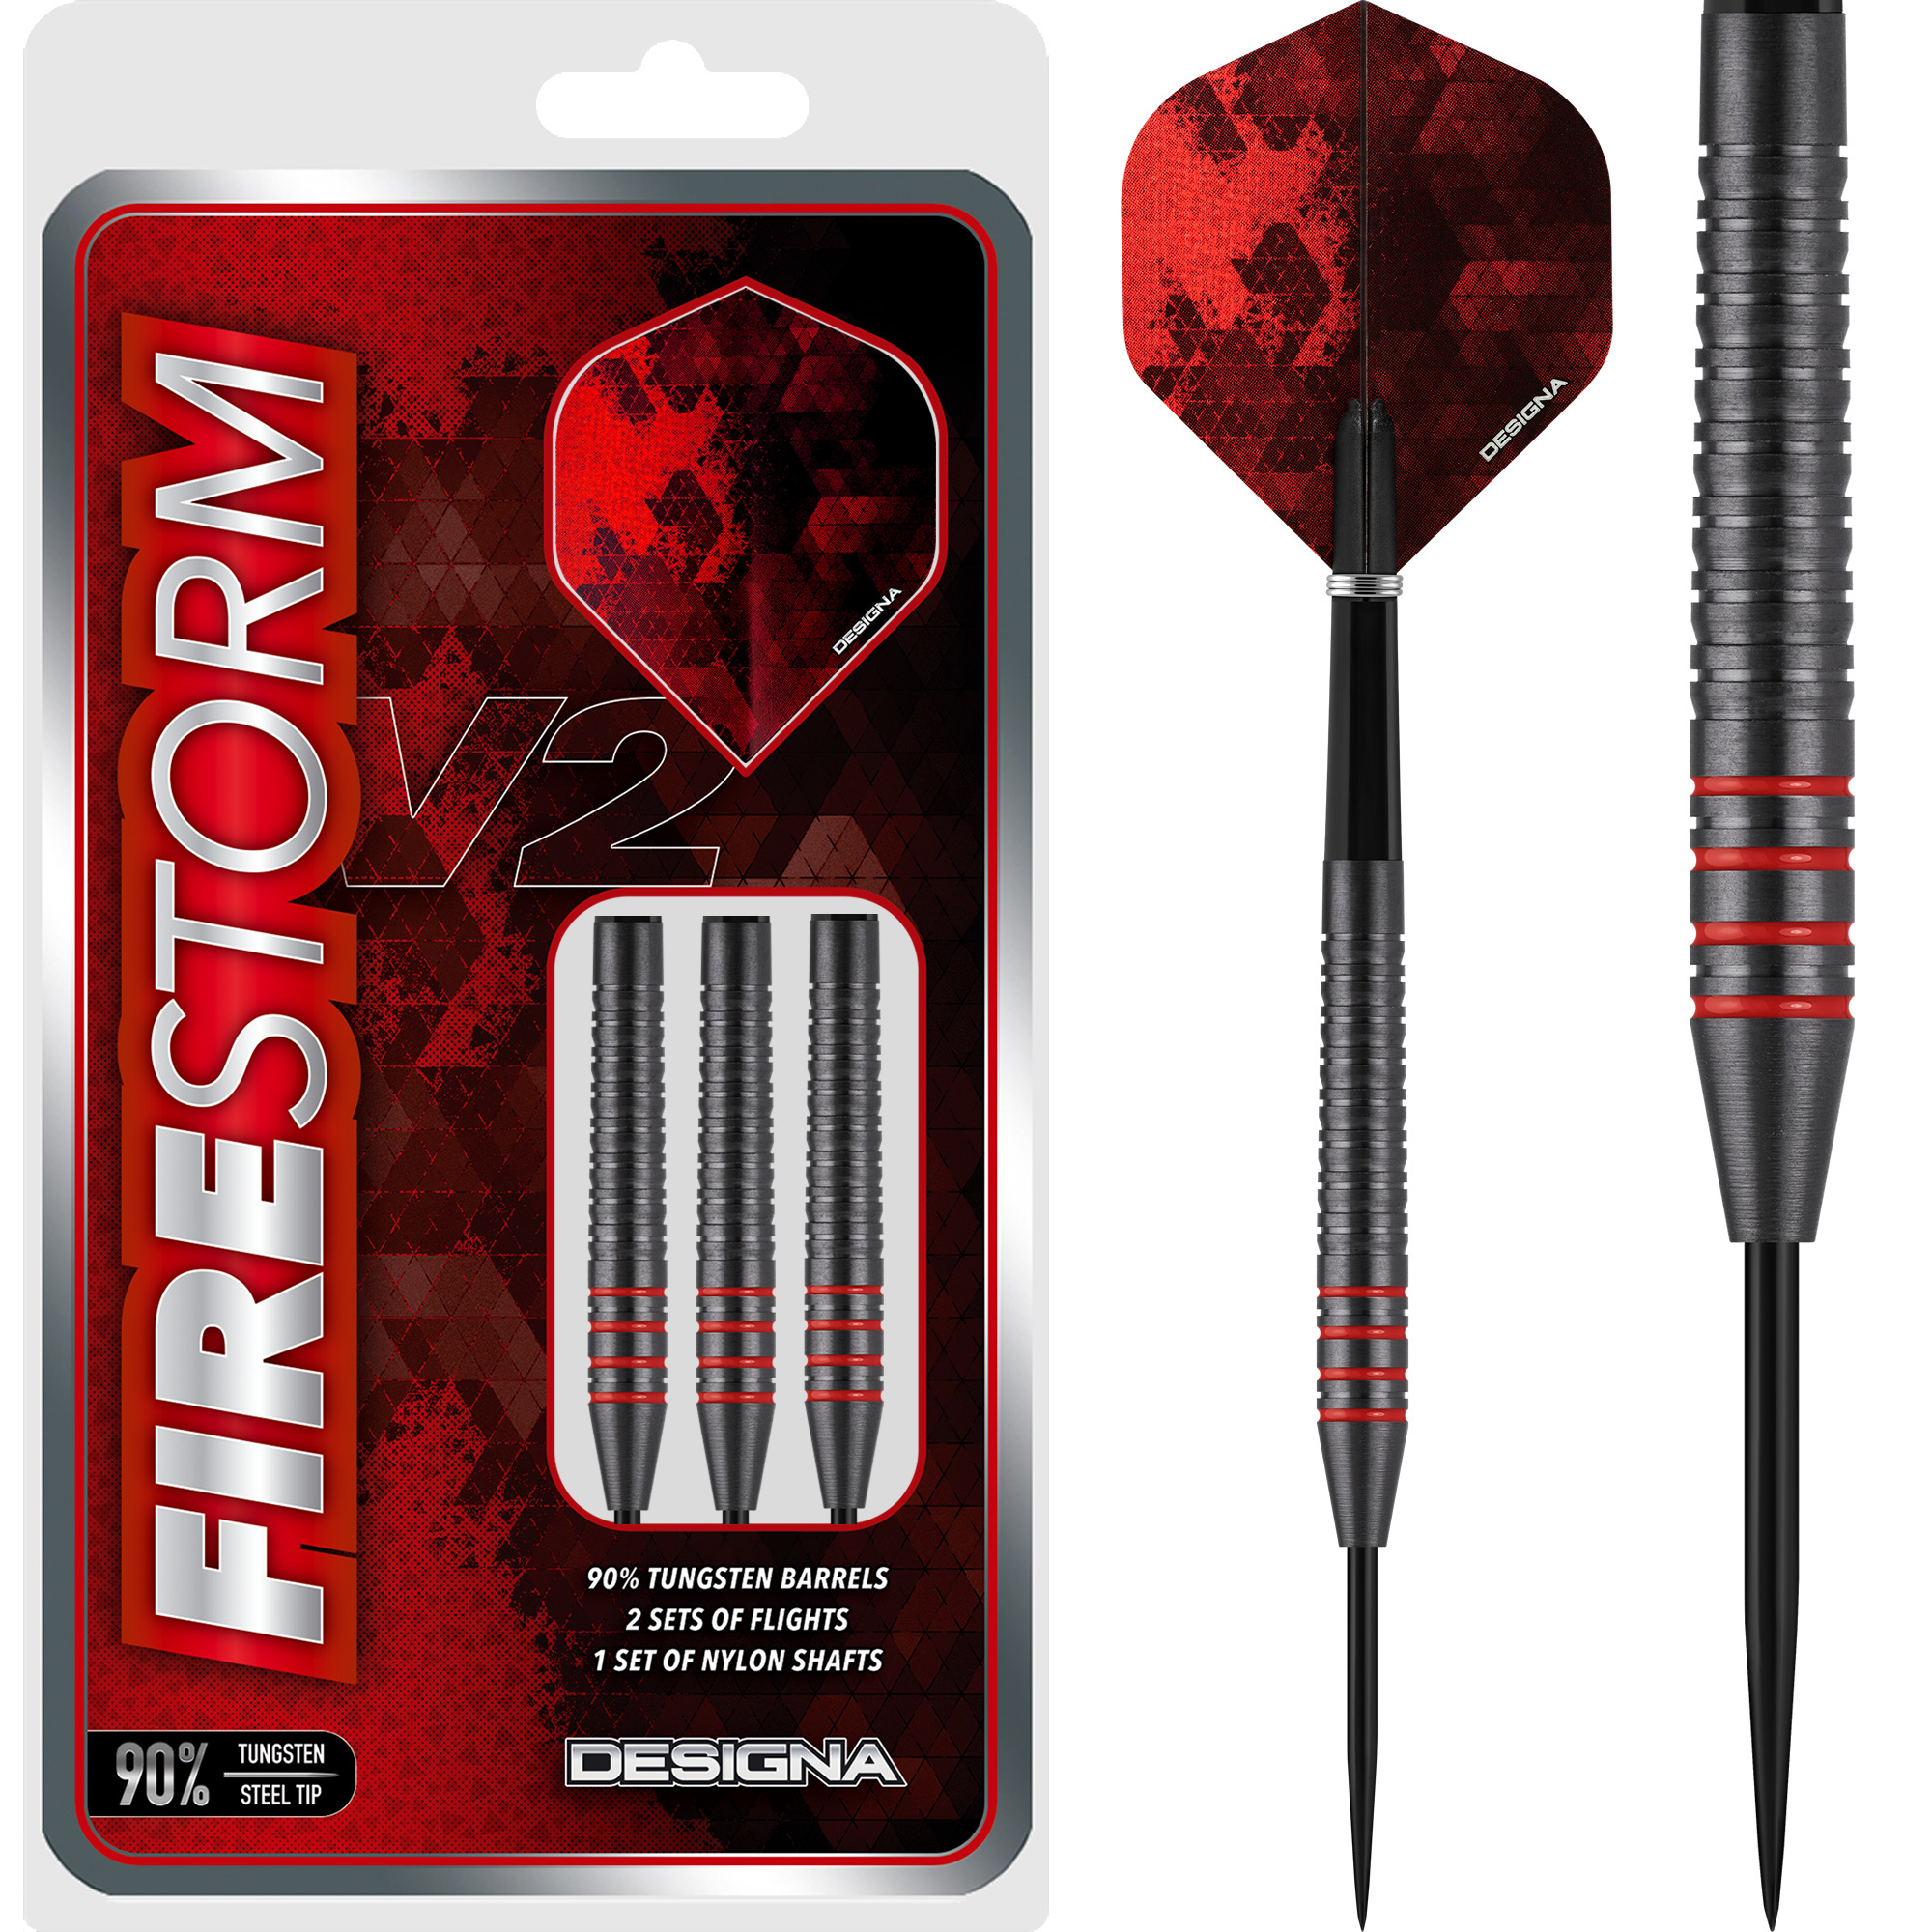 Designa Firestorm V2 Triple One Darts